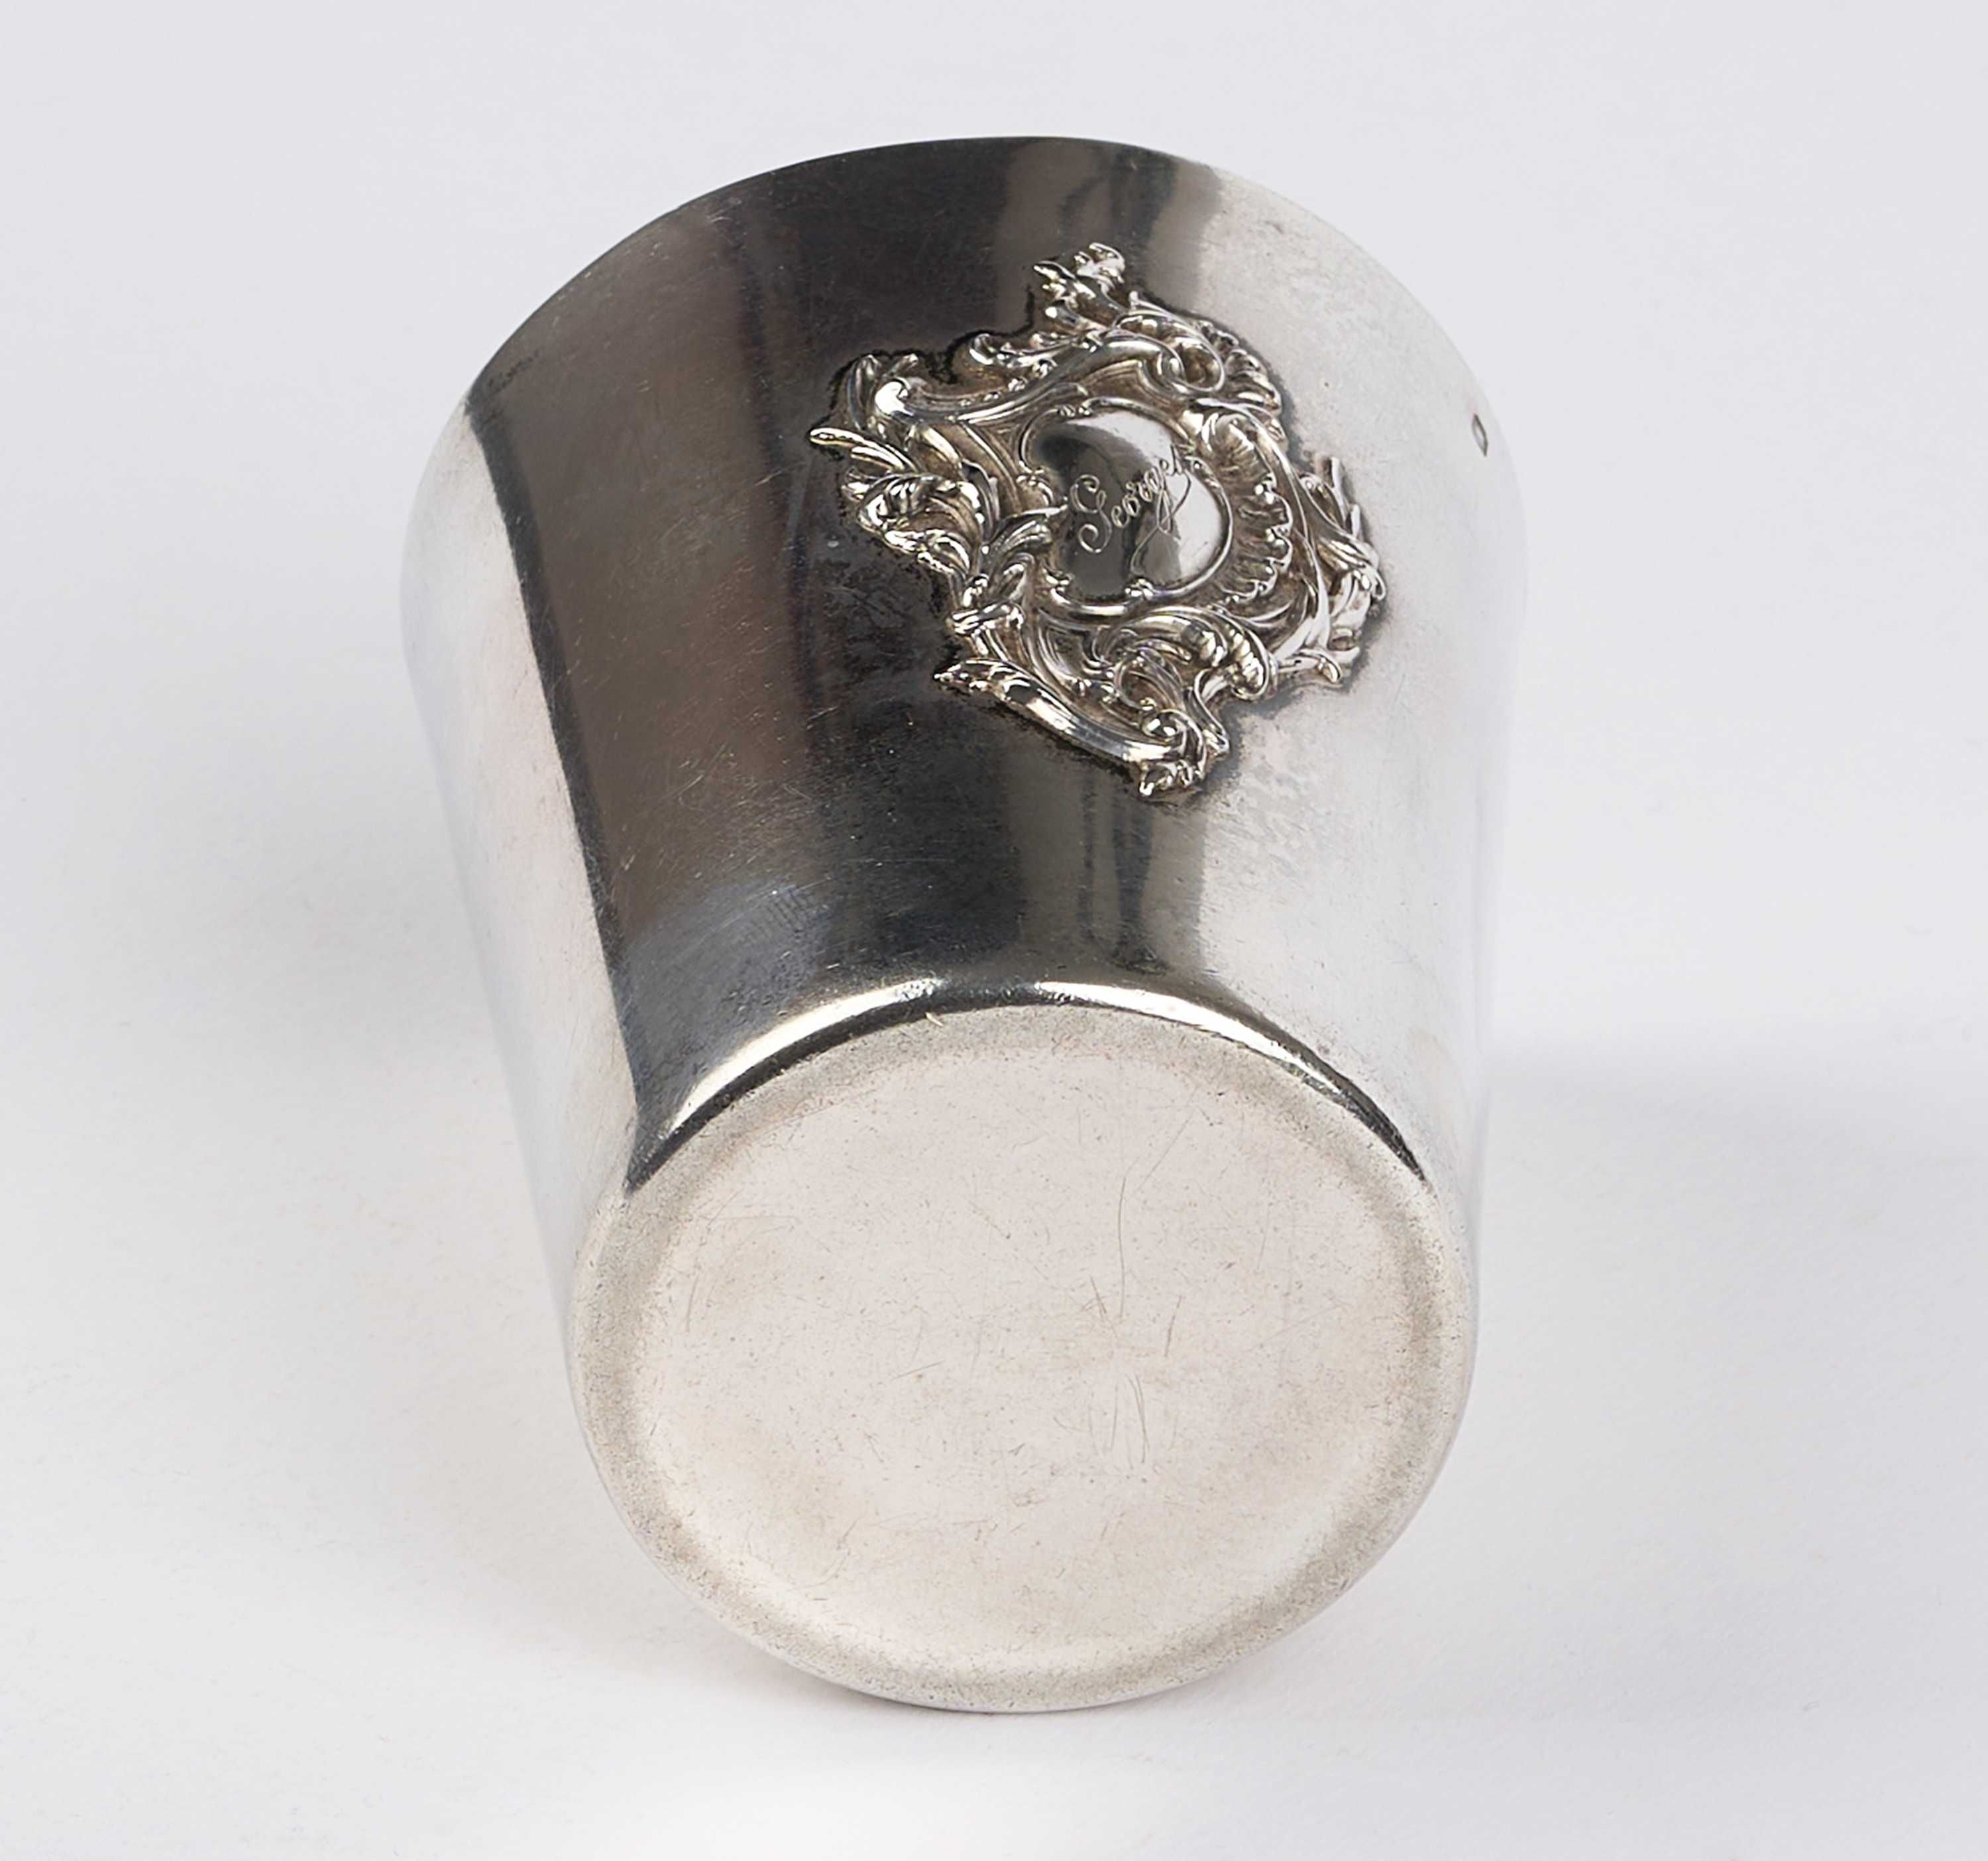 Pahar mare de argint 950,ranta,emblema nobiliara,210 ml purificare apa